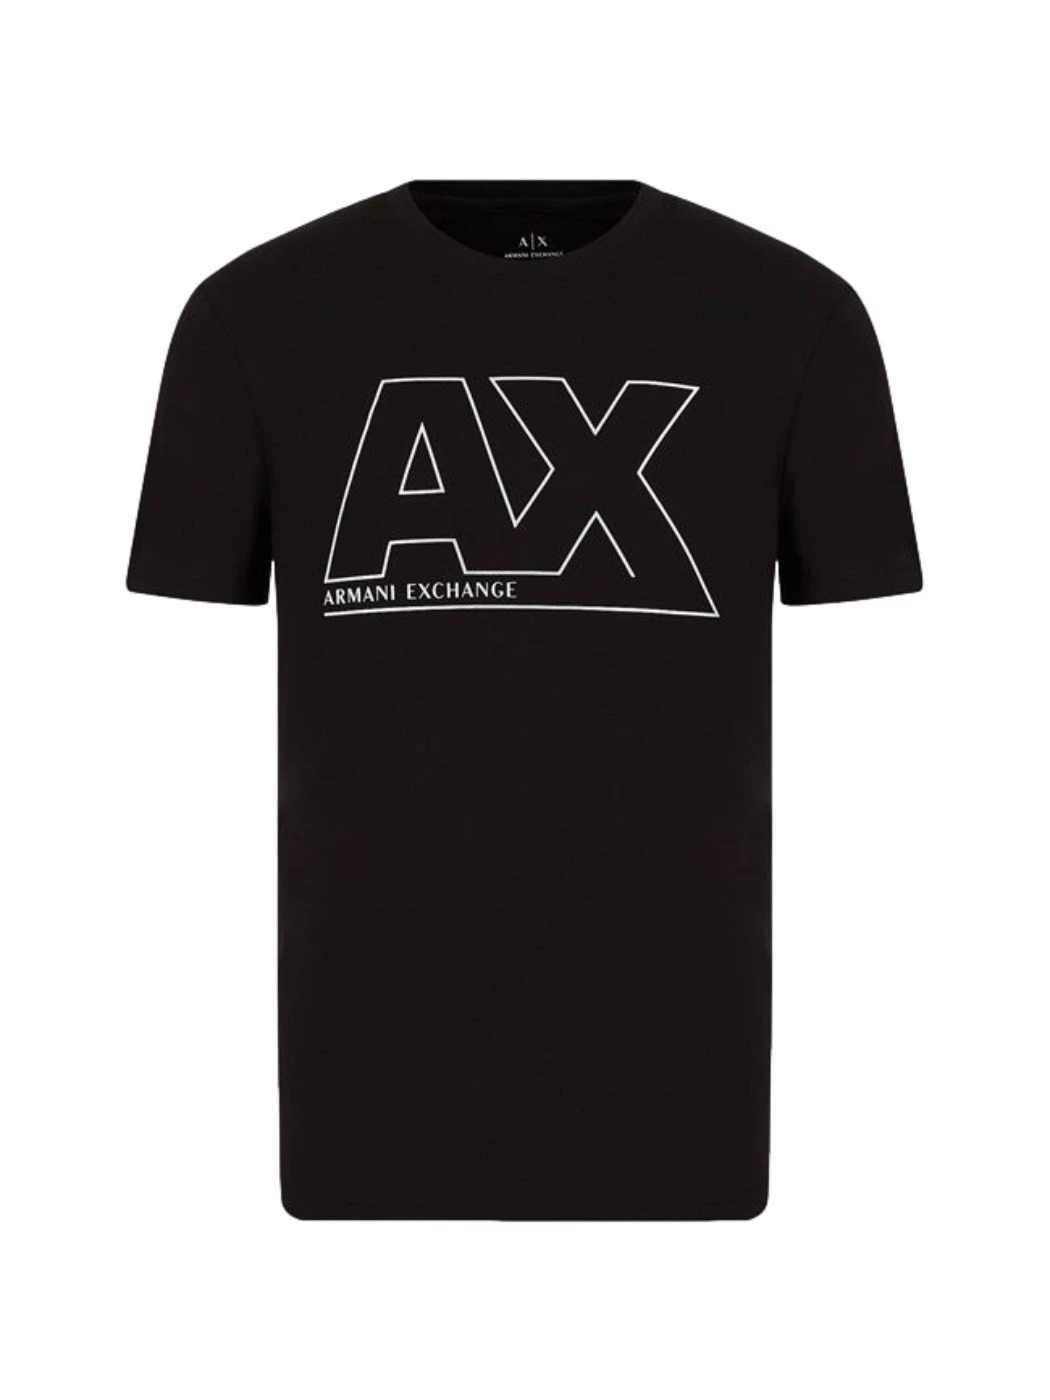 Slim fit T-shirt with armani exchange shiny maxi-logo